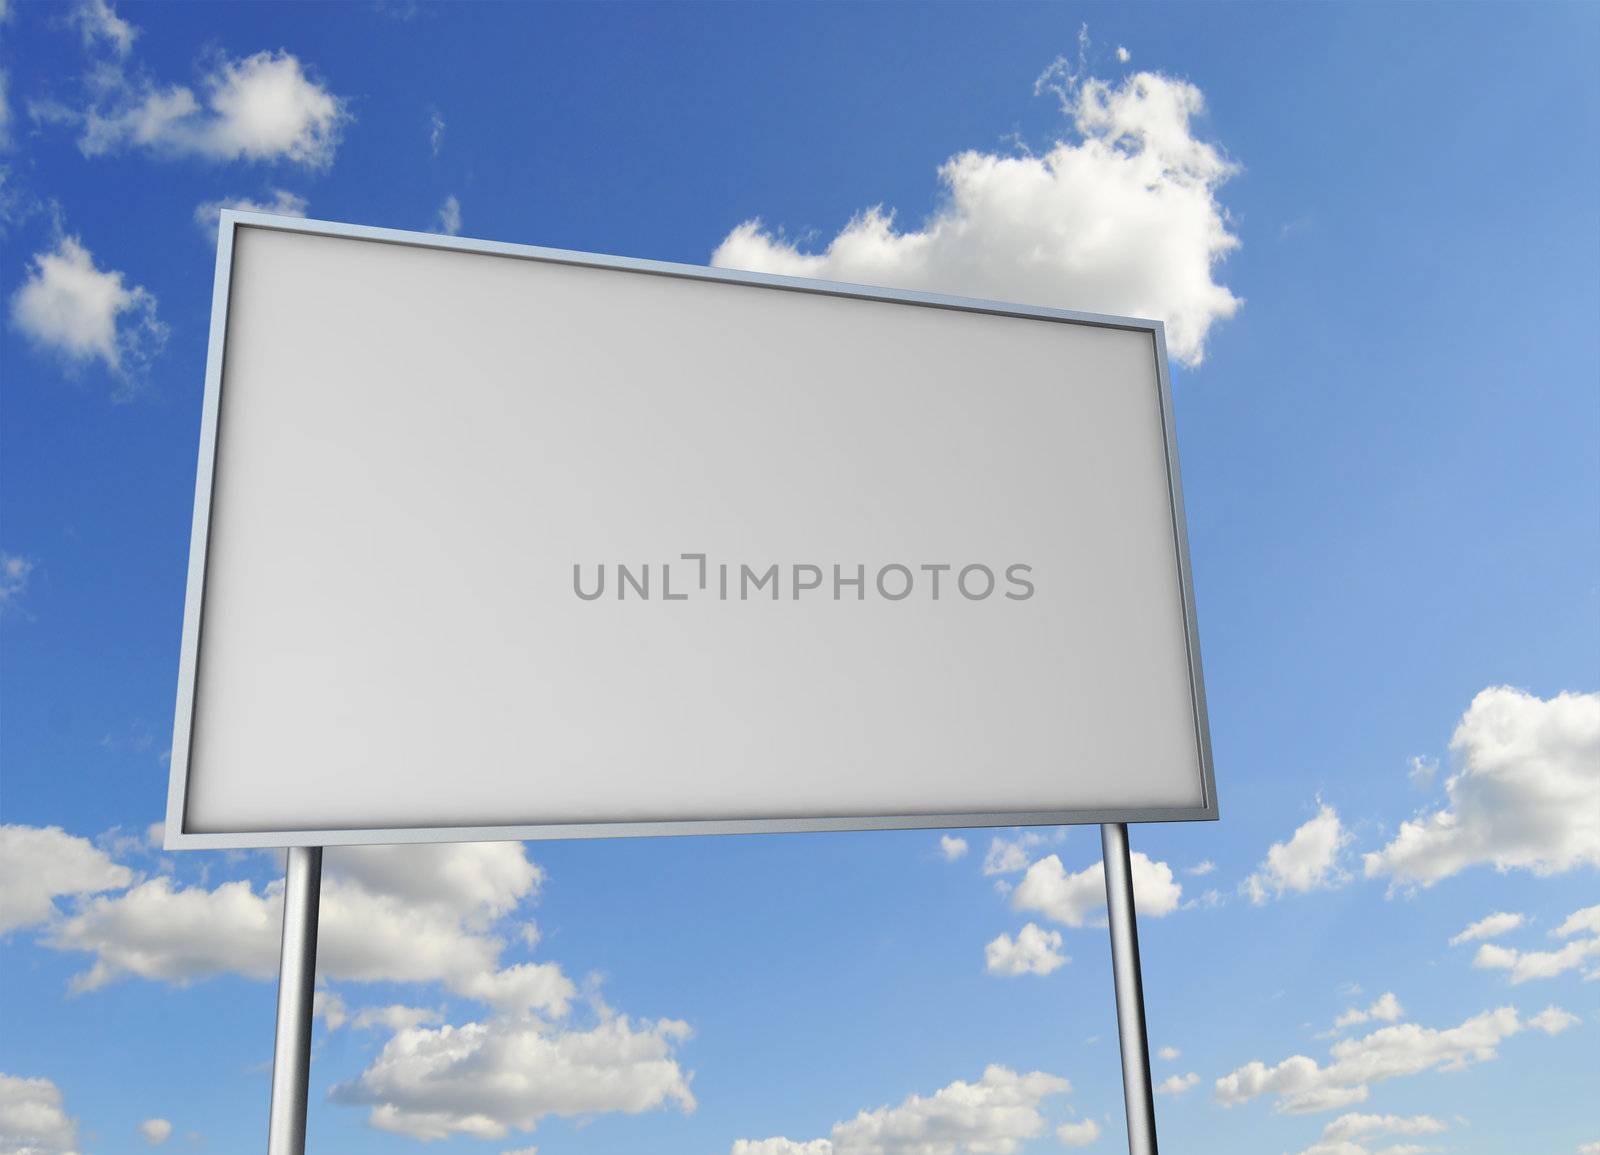 Big customizable billboard against blue sky